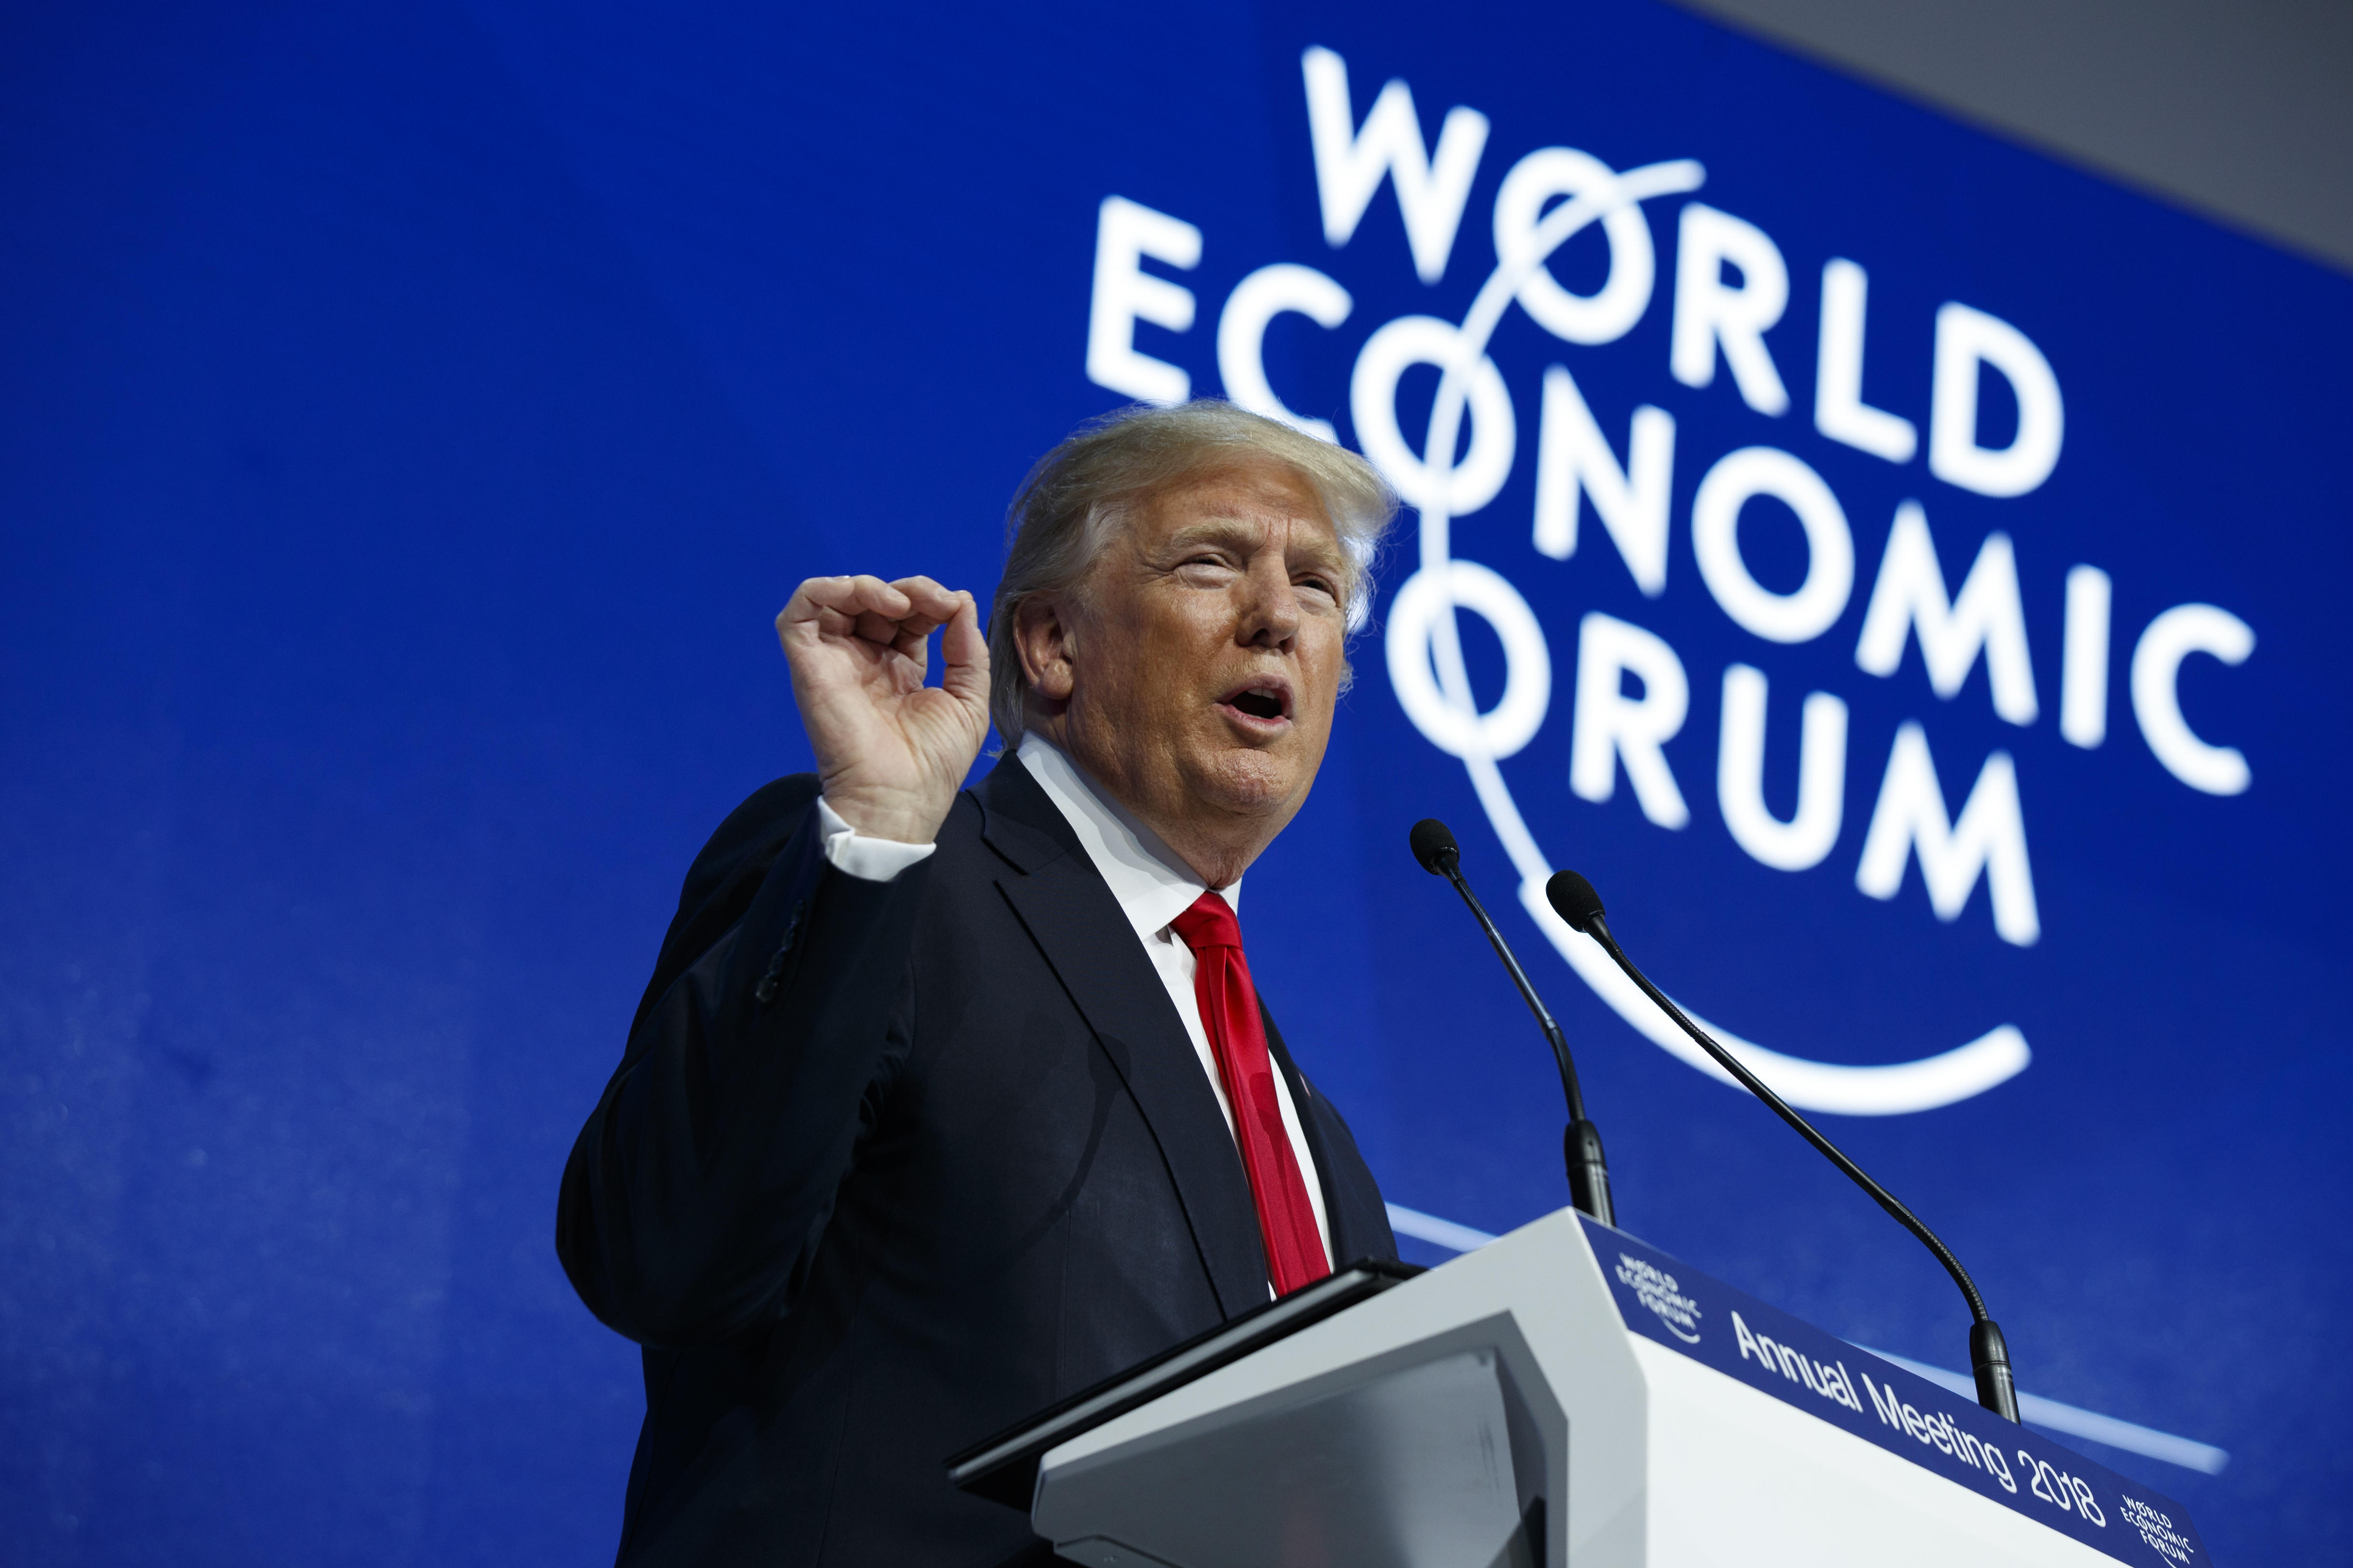 Trump in Davos World Economic Forum speech live stream from Davos